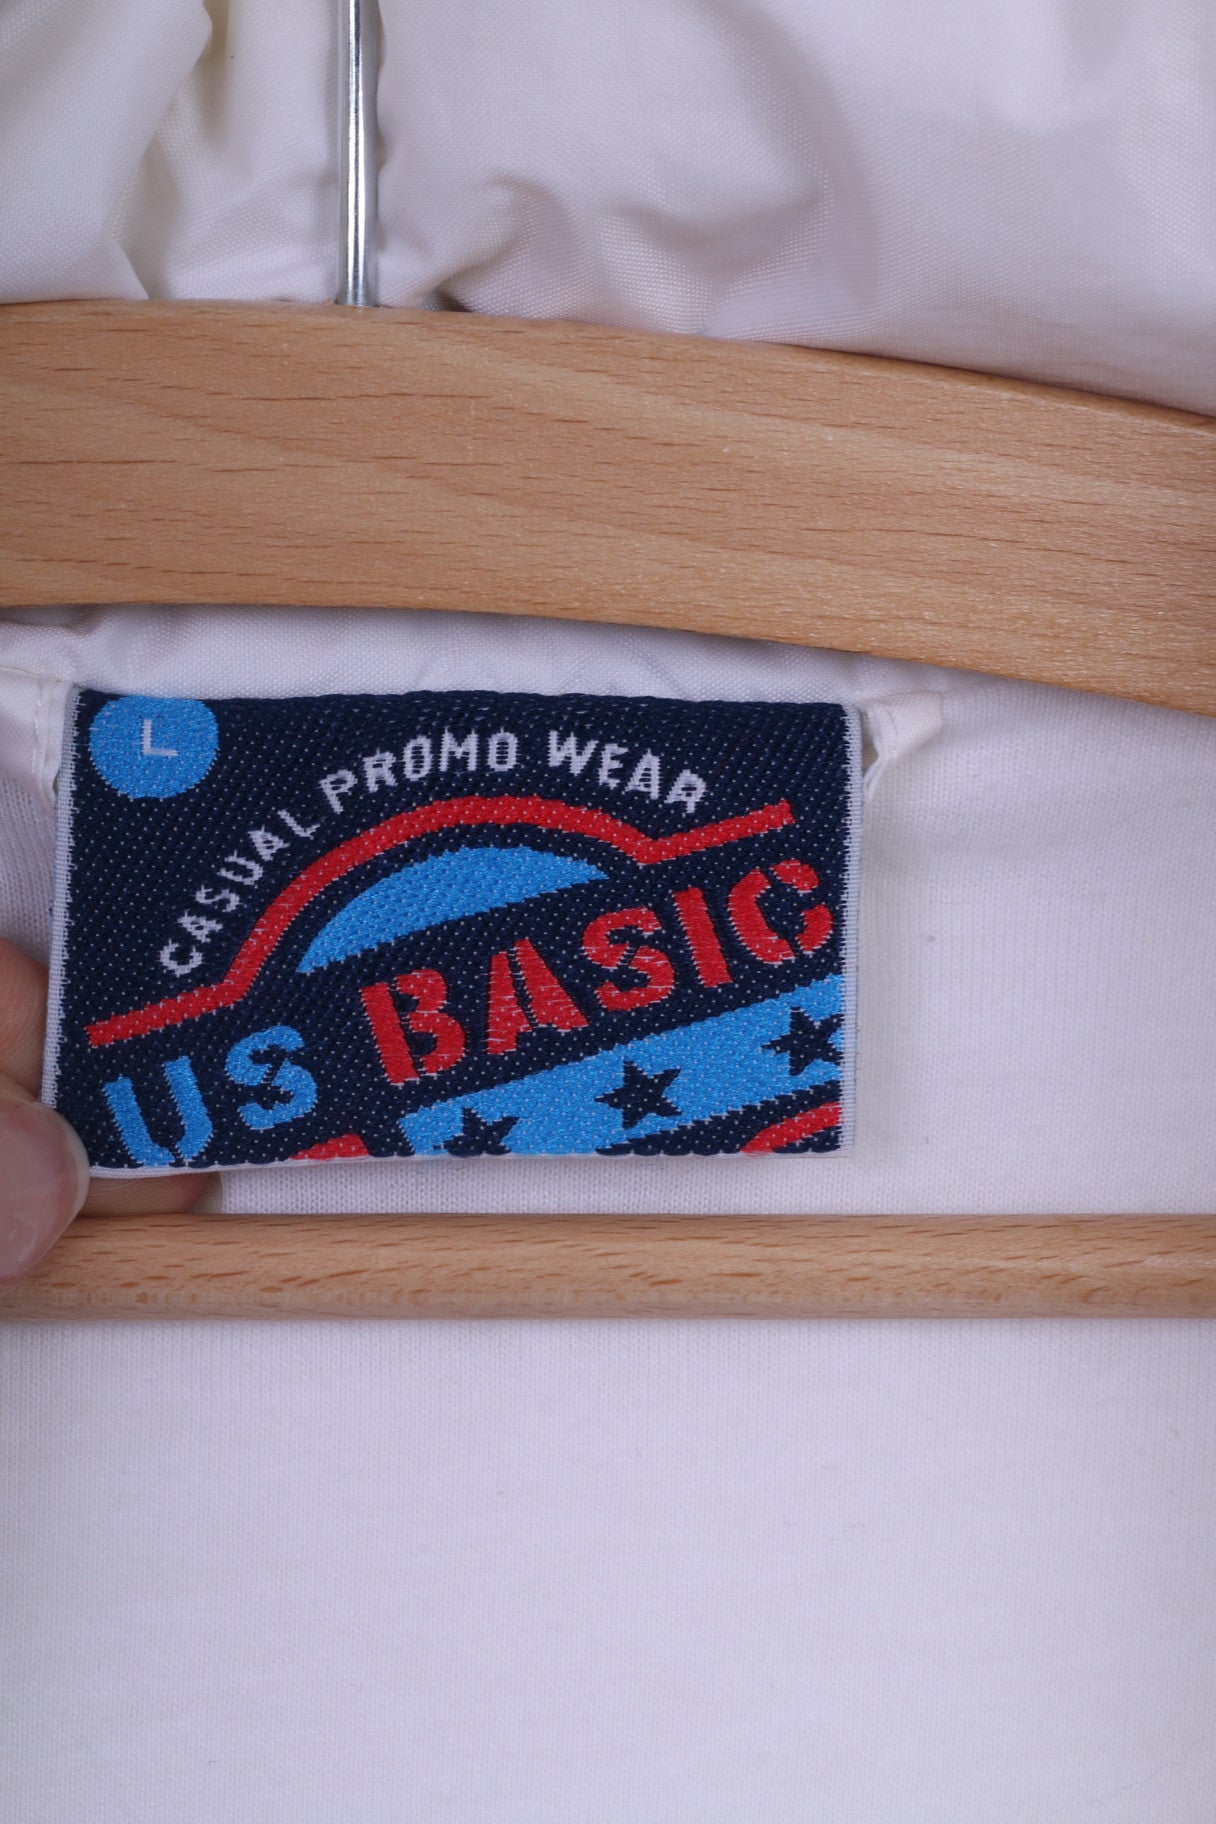 US Basic Womens L Jacket Cream Nylon Waterproof BMW Zip Up Lightweight Top